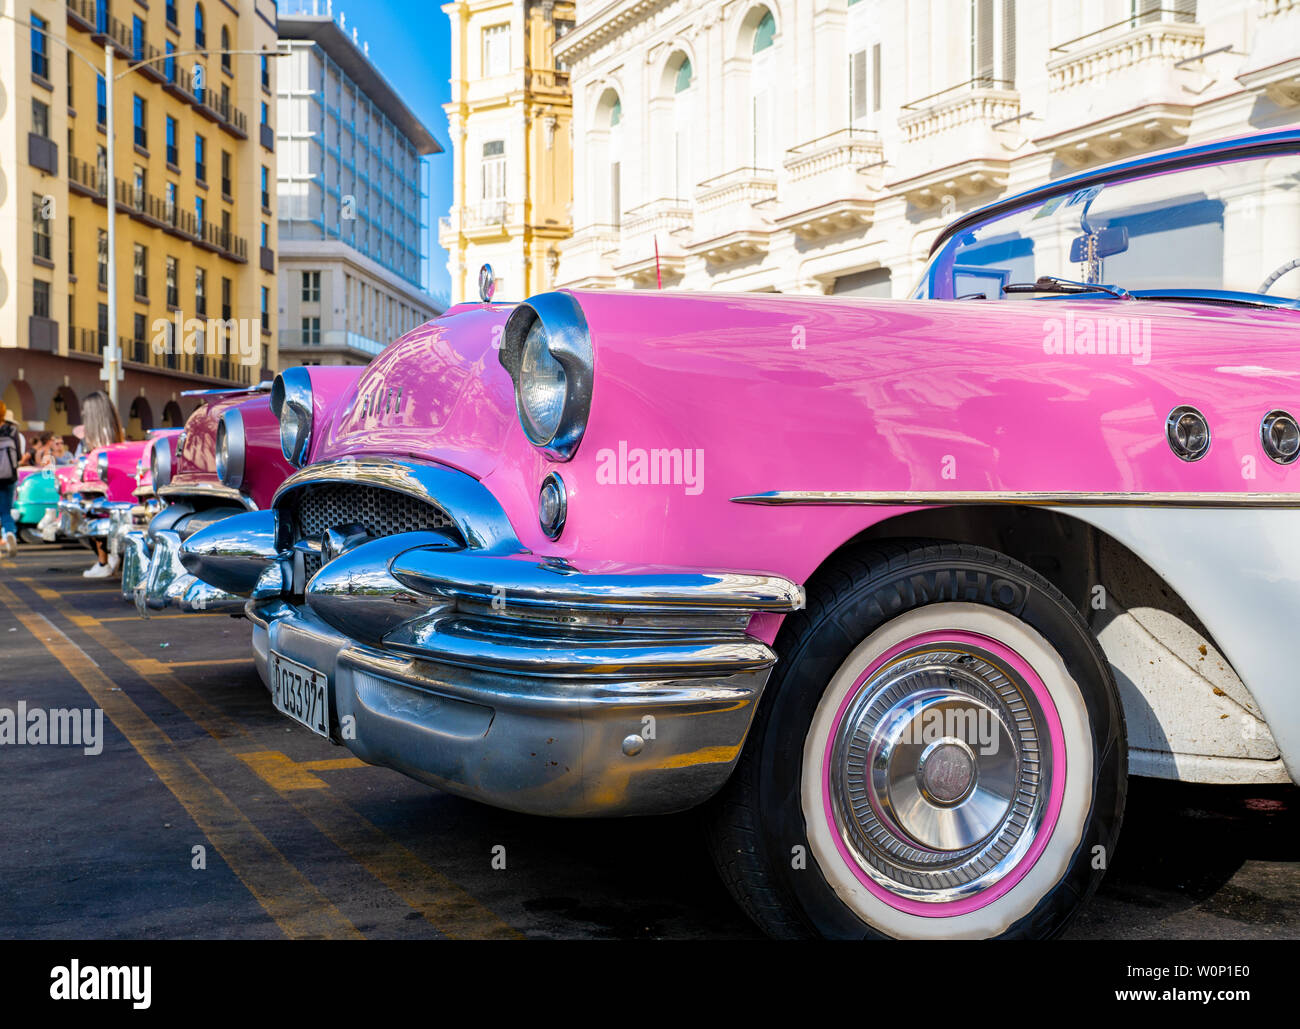 Schöne klassische amerikanische Autos in der Stadt Havanna, Kuba. Stockfoto